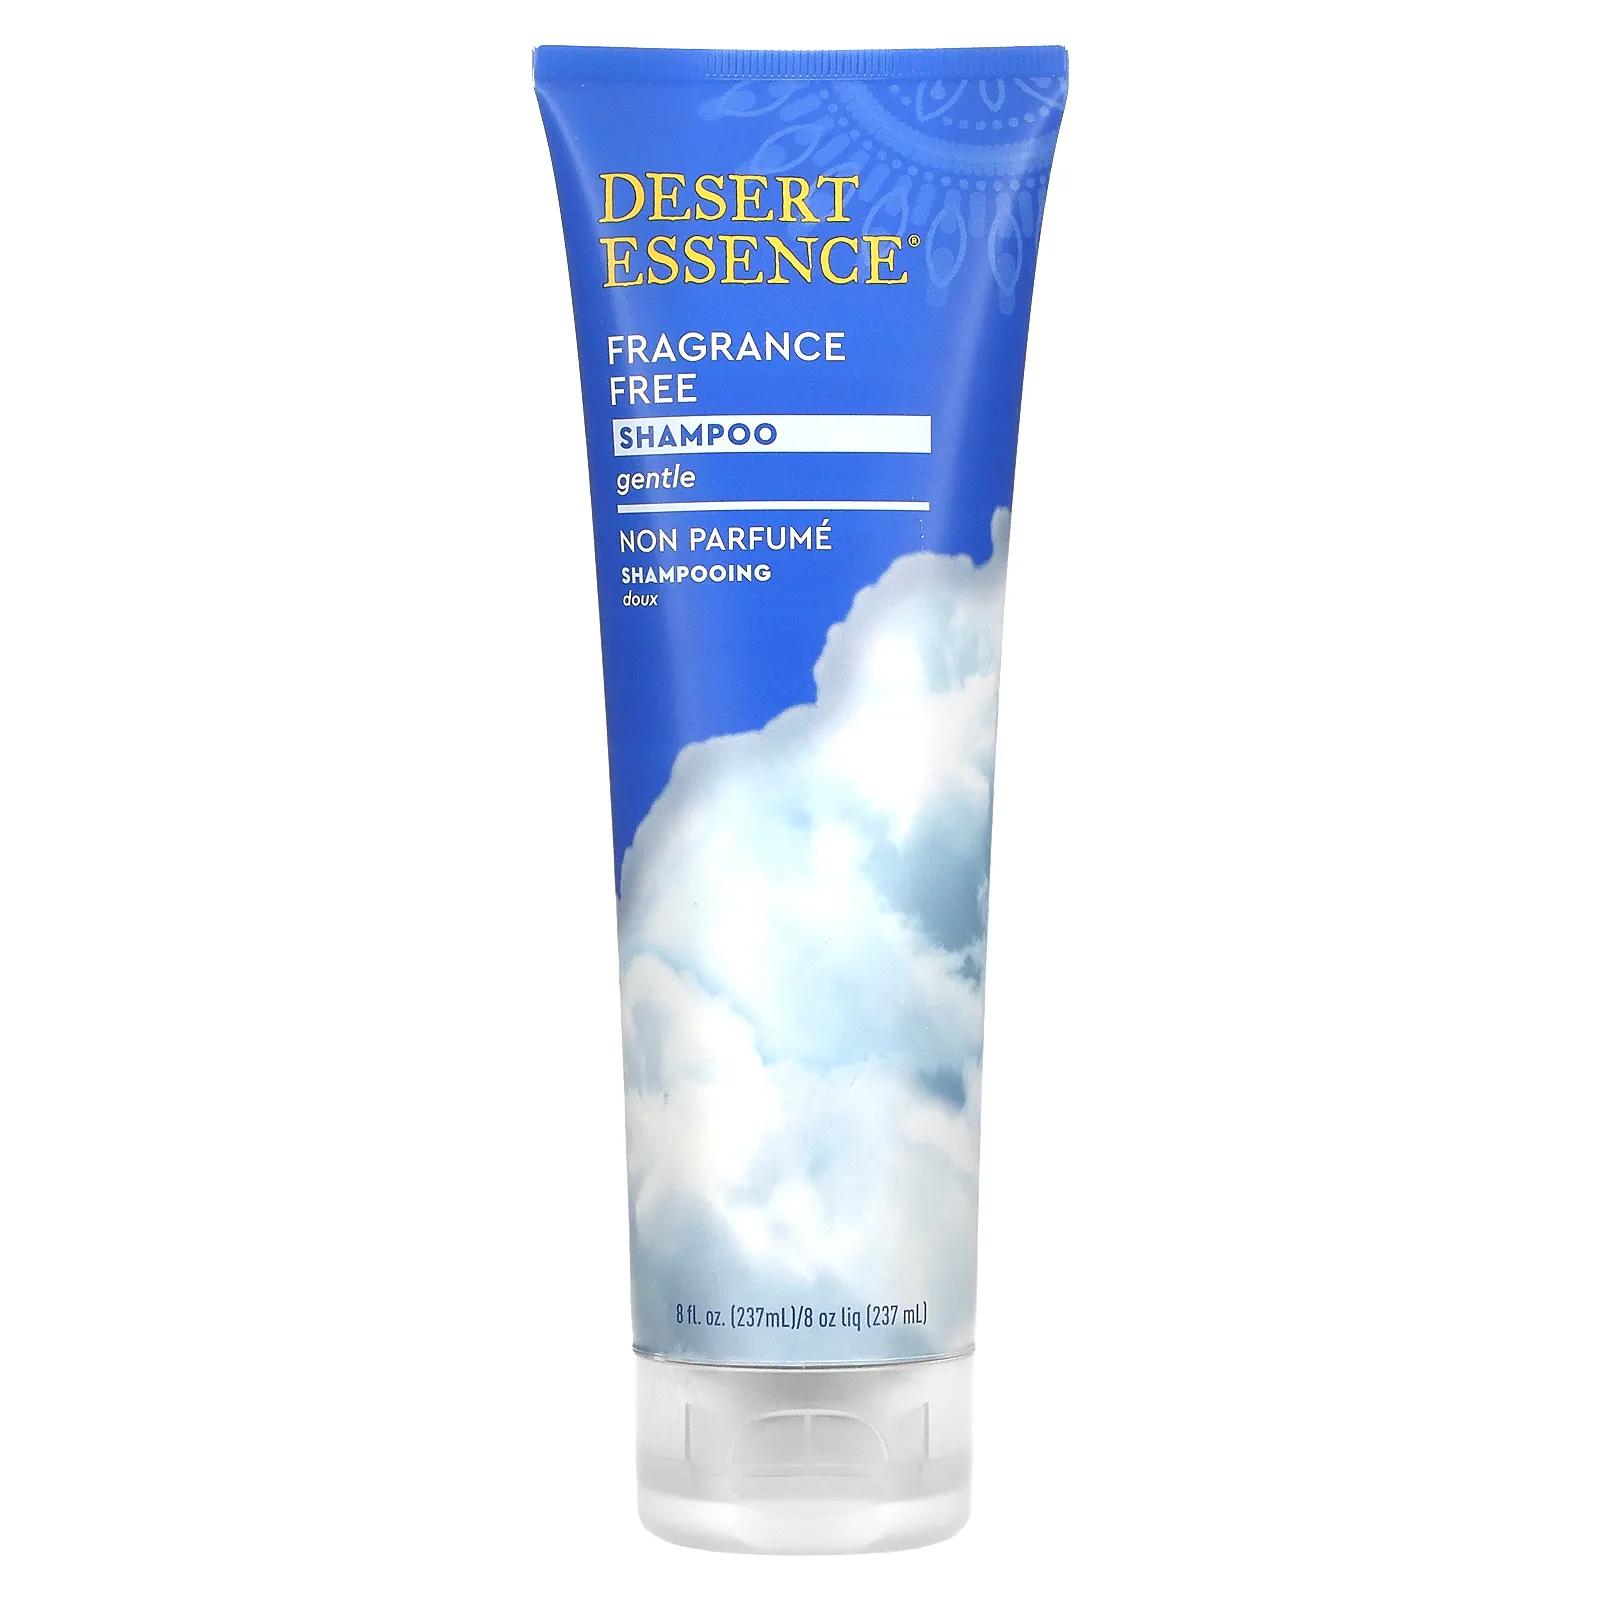 Desert Essence Organics Shampoo Fragrance Free 8 fl oz (237 ml) цена и фото